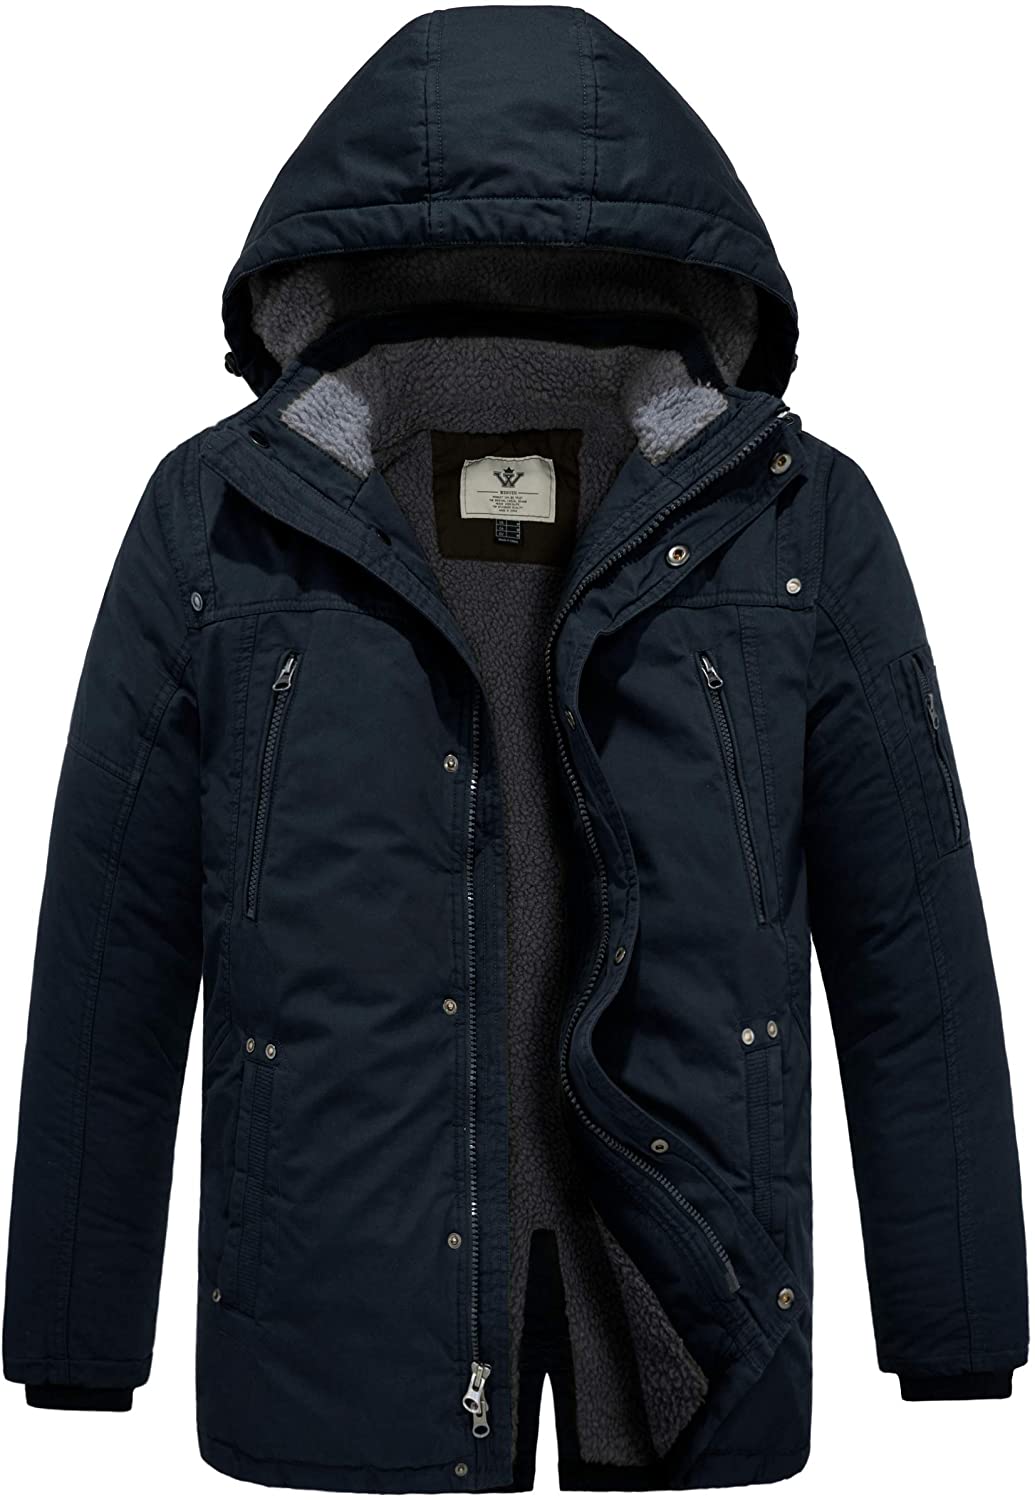 WenVen Men's Winter Warm Parka Jacket Sherpa Lined Cotton